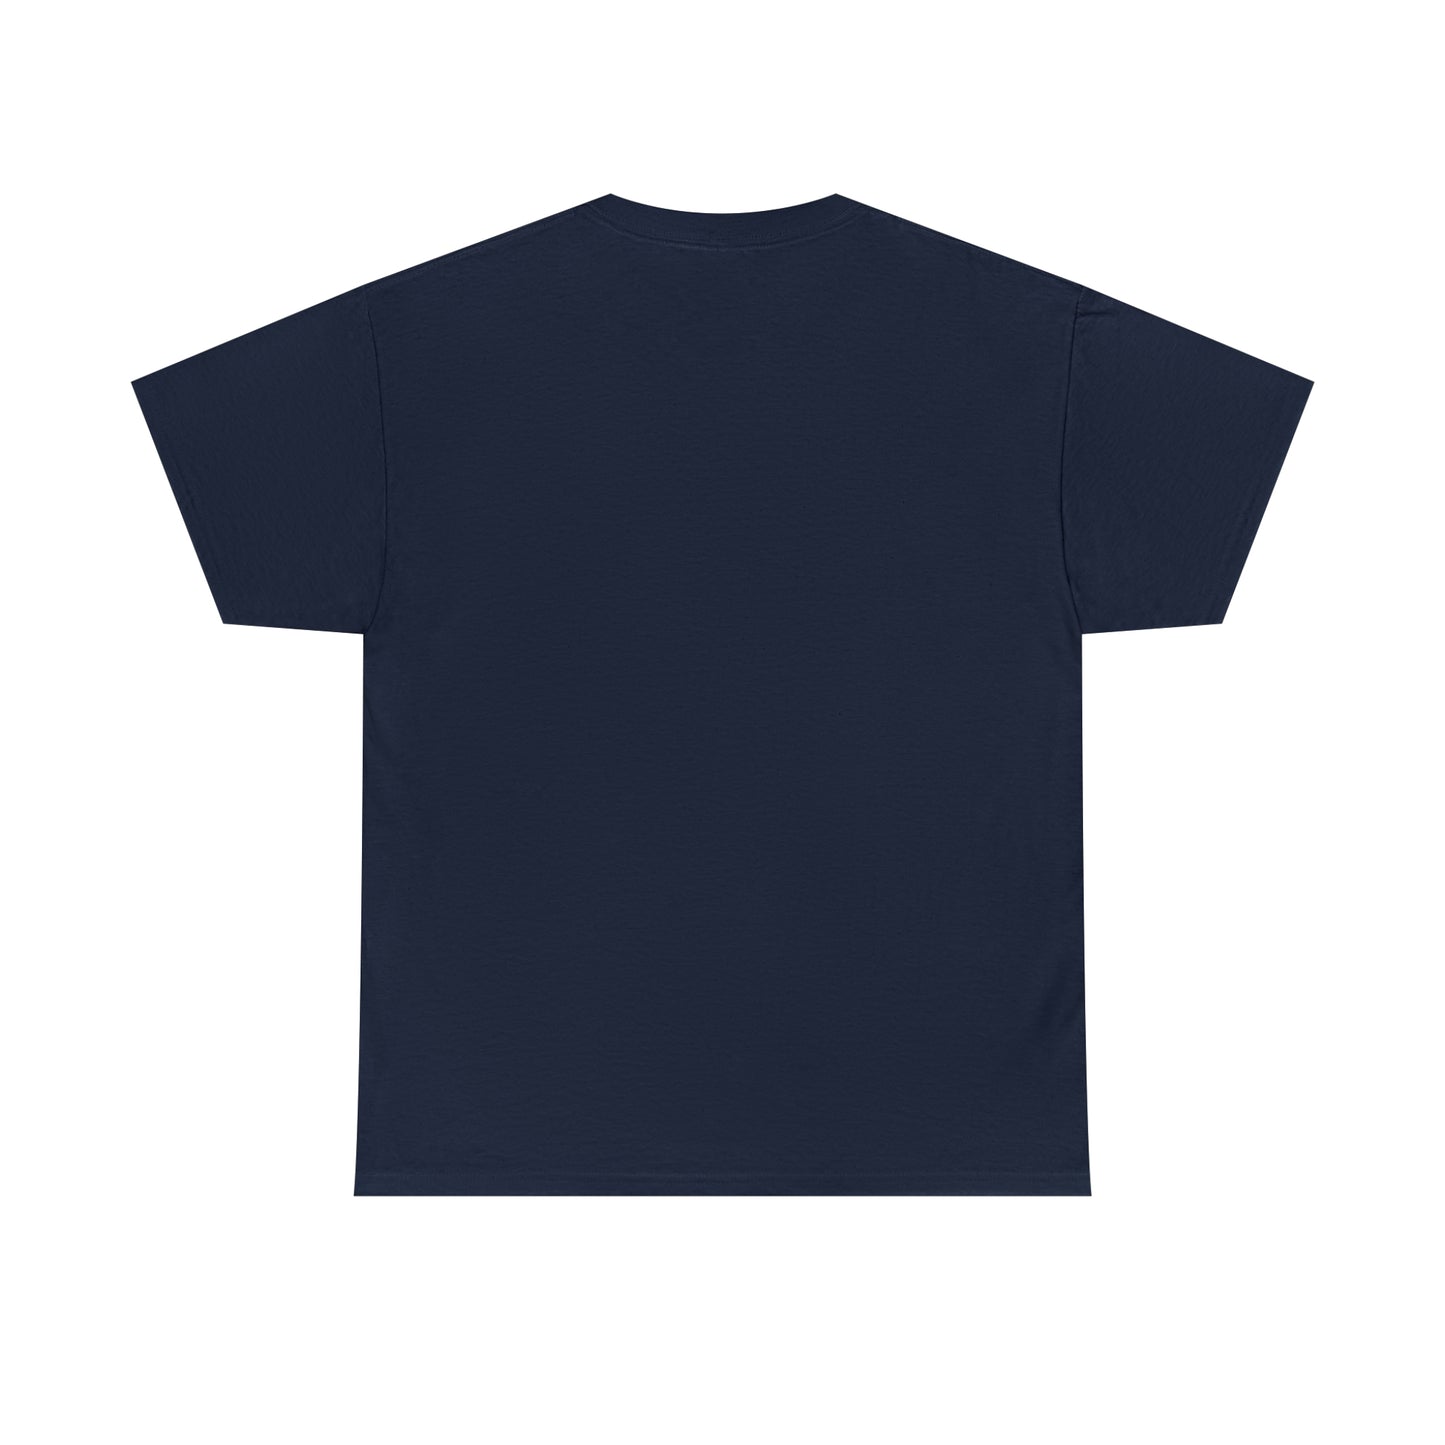 Salvadoran Roots Design 3: Unisex T-Shirt